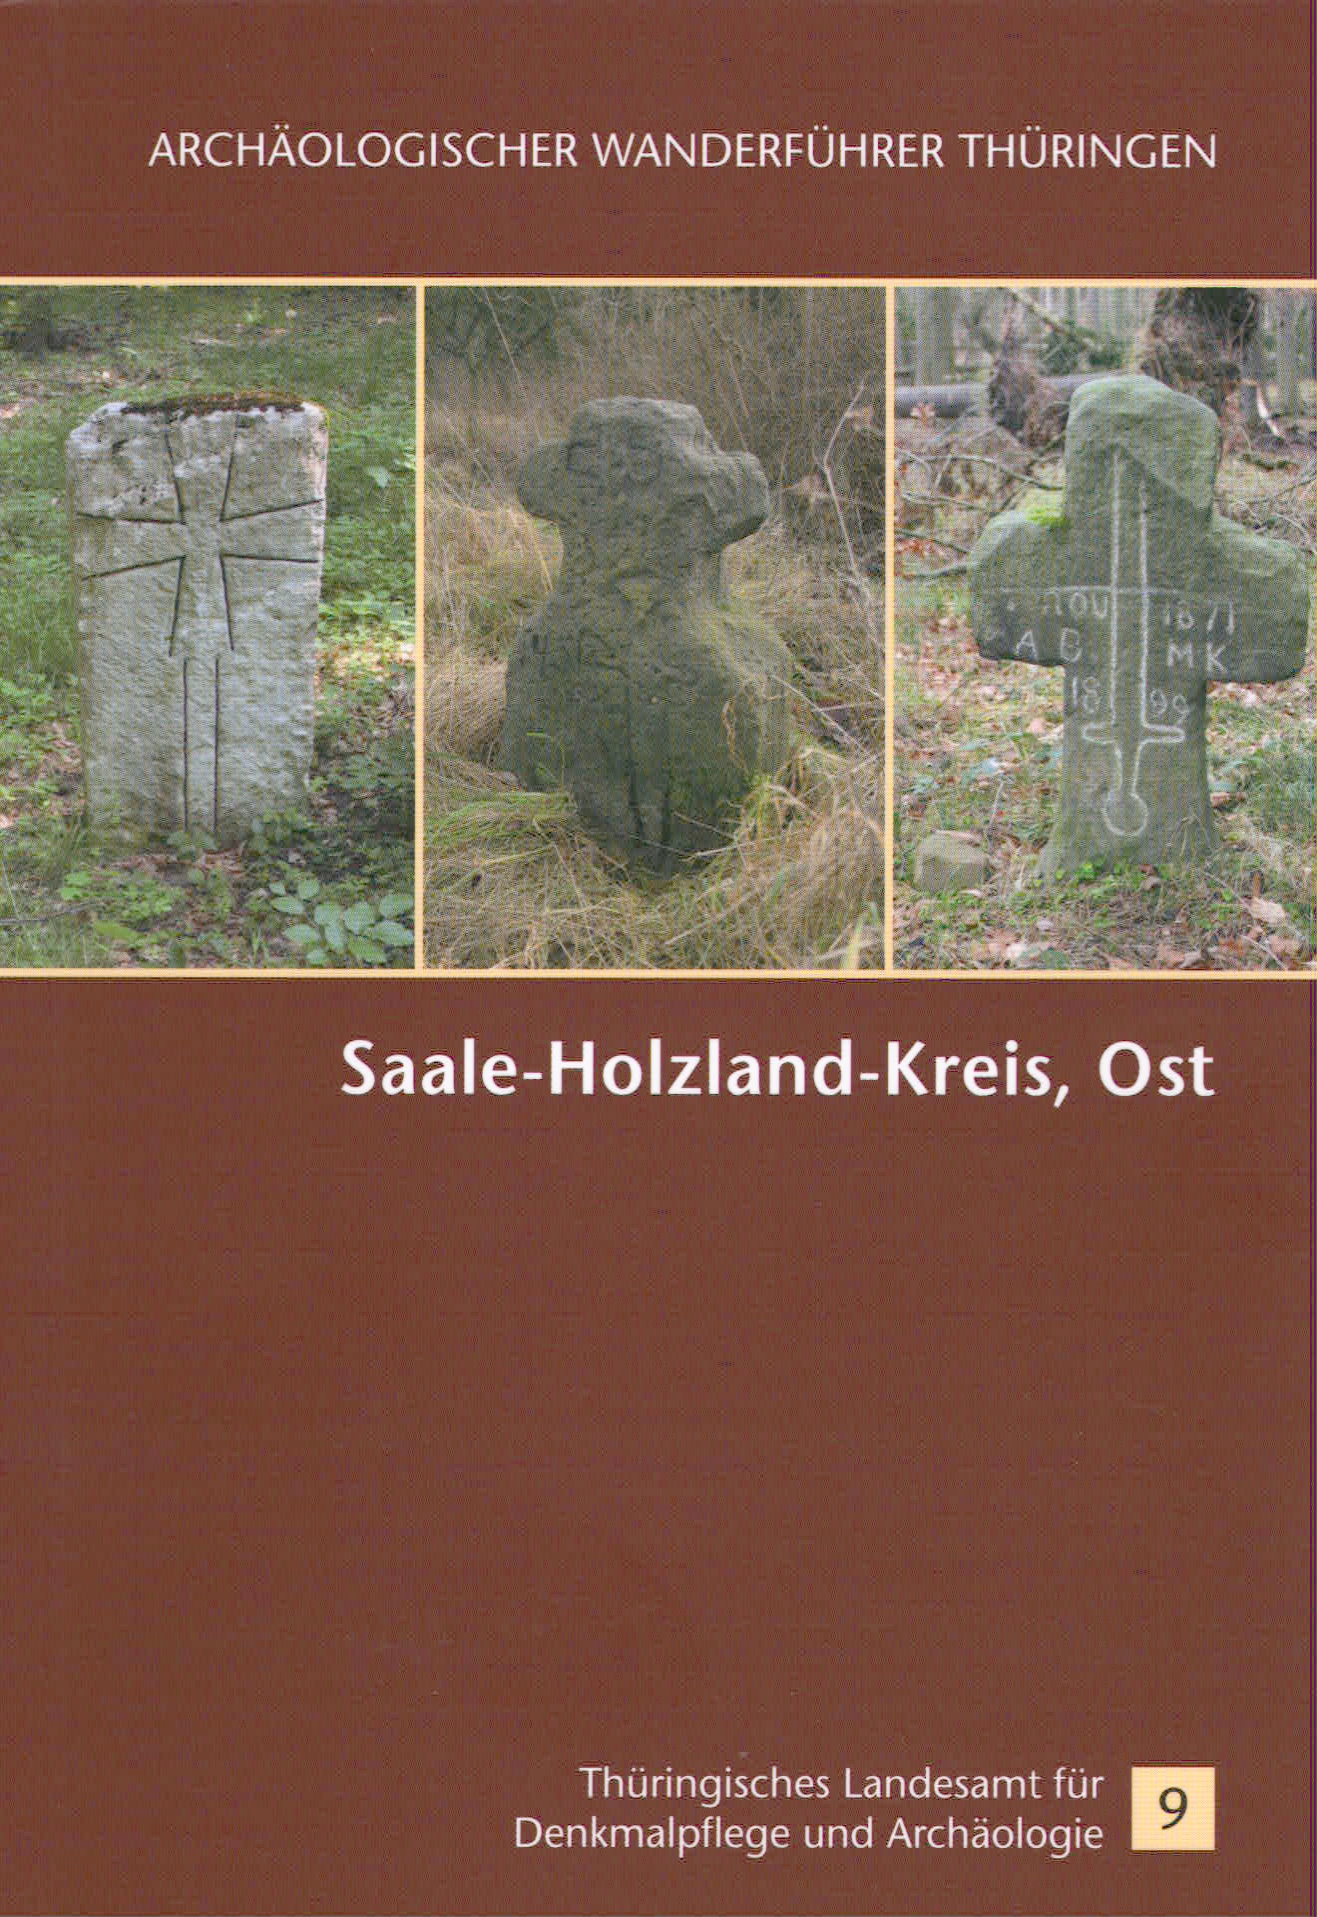 Archäologischer Wanderführer Thüringen 9: Saale-Holzland-Kreis, Ost - Sven Ostritz